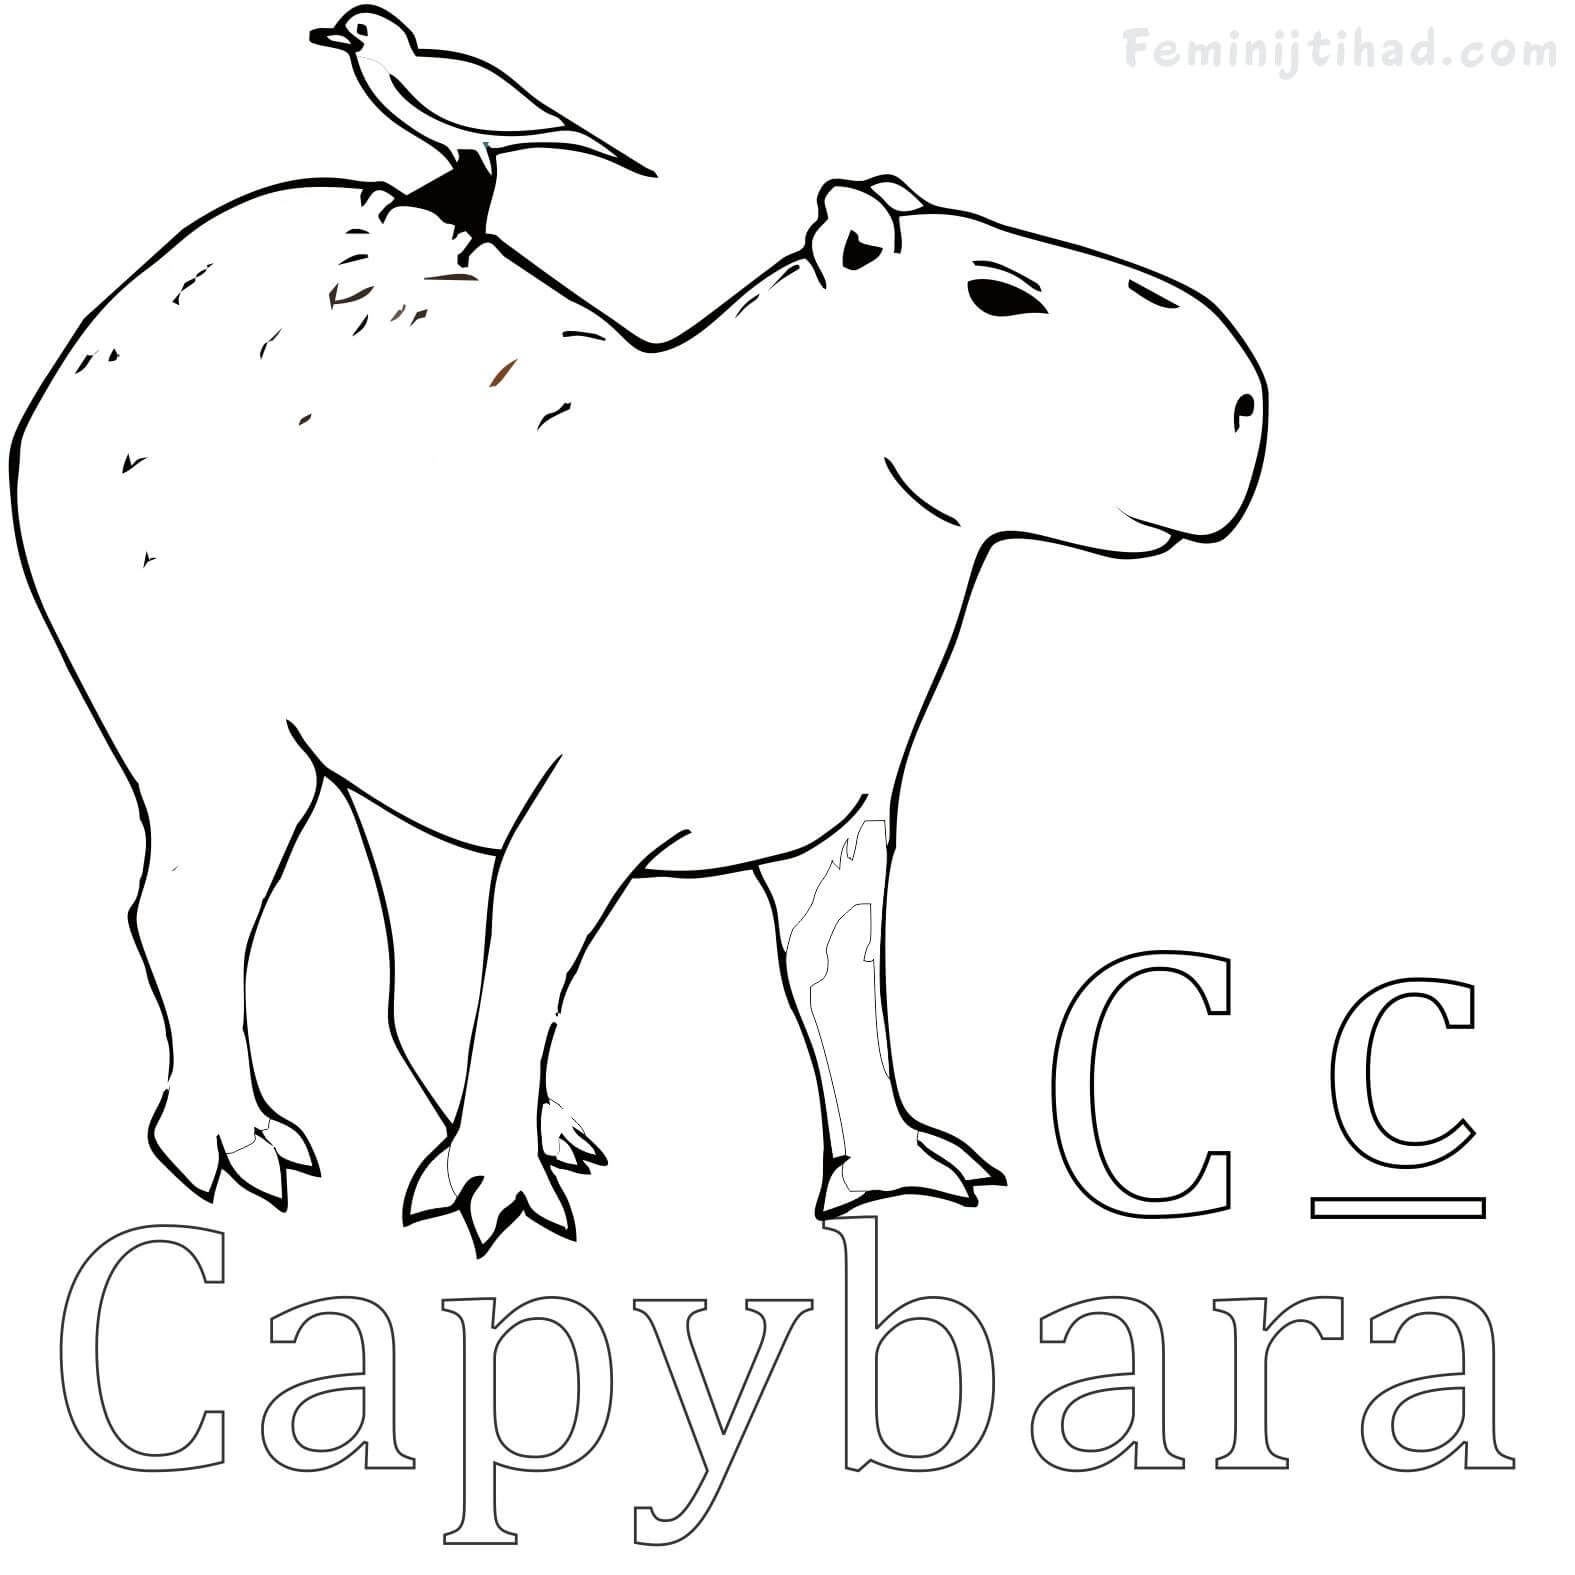 Capybara for kids #12